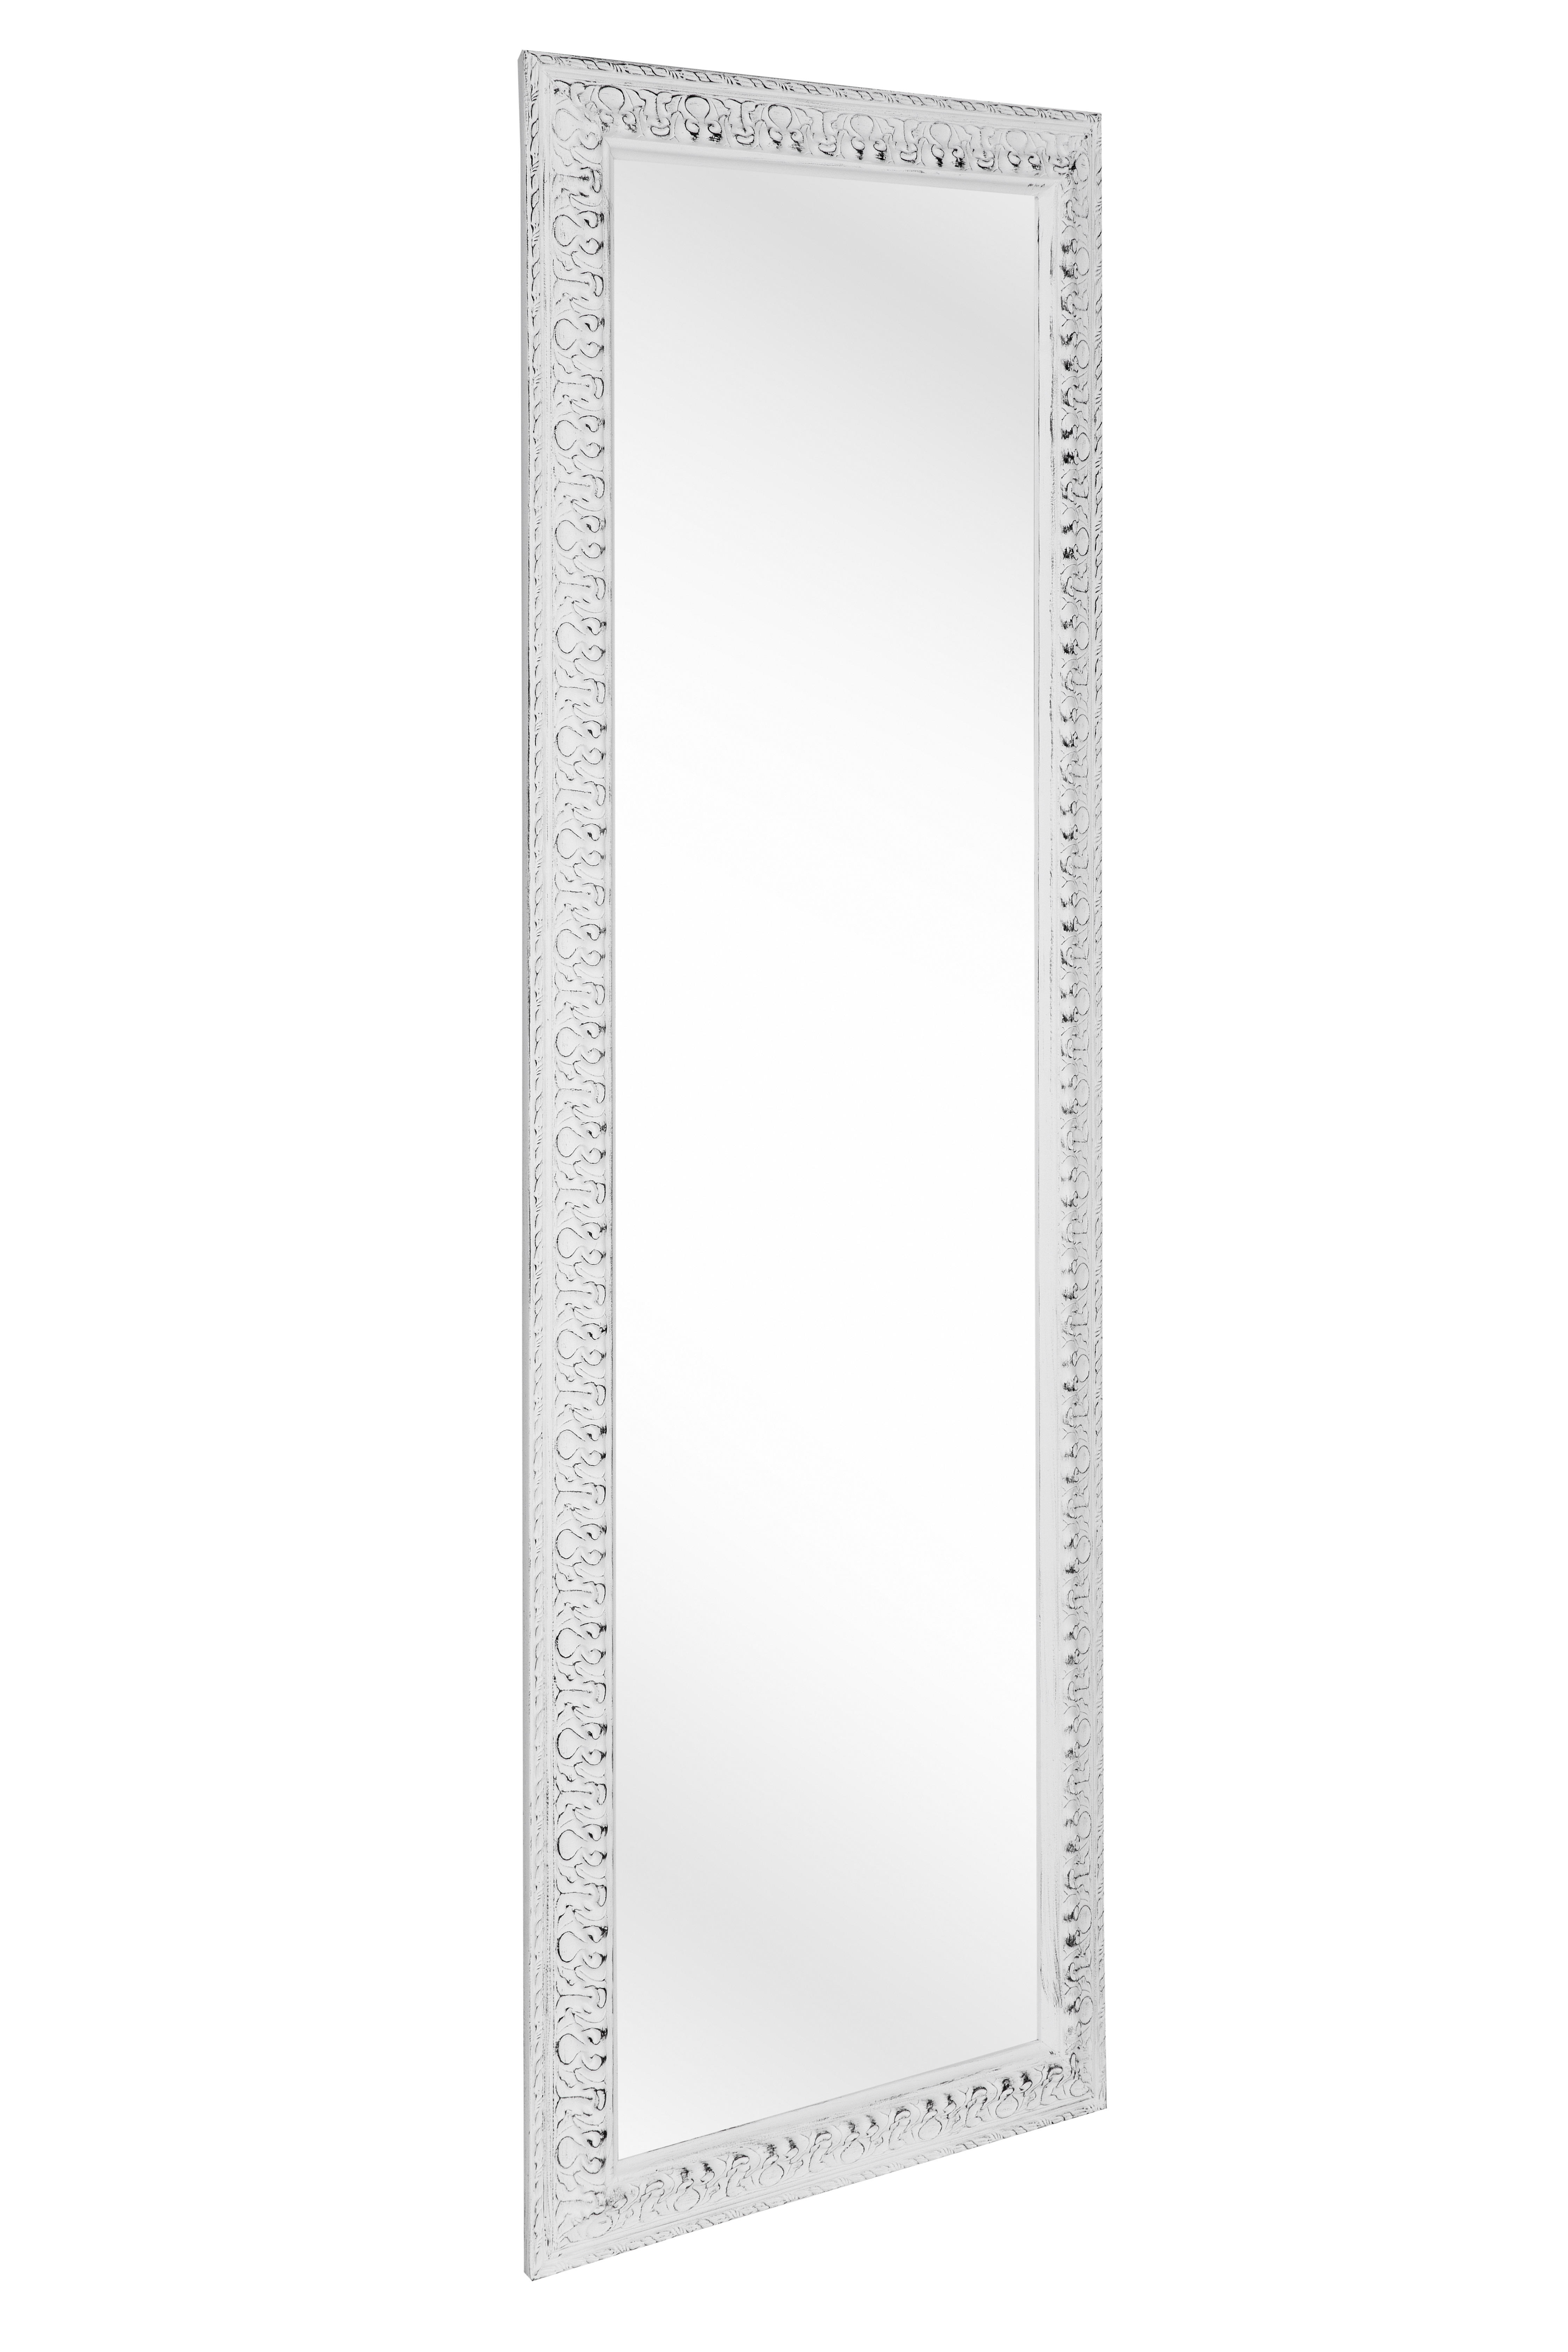 WANDSPIEGEL Weiß  - Weiß, LIFESTYLE, Glas/Holz (50/150/3cm) - Carryhome